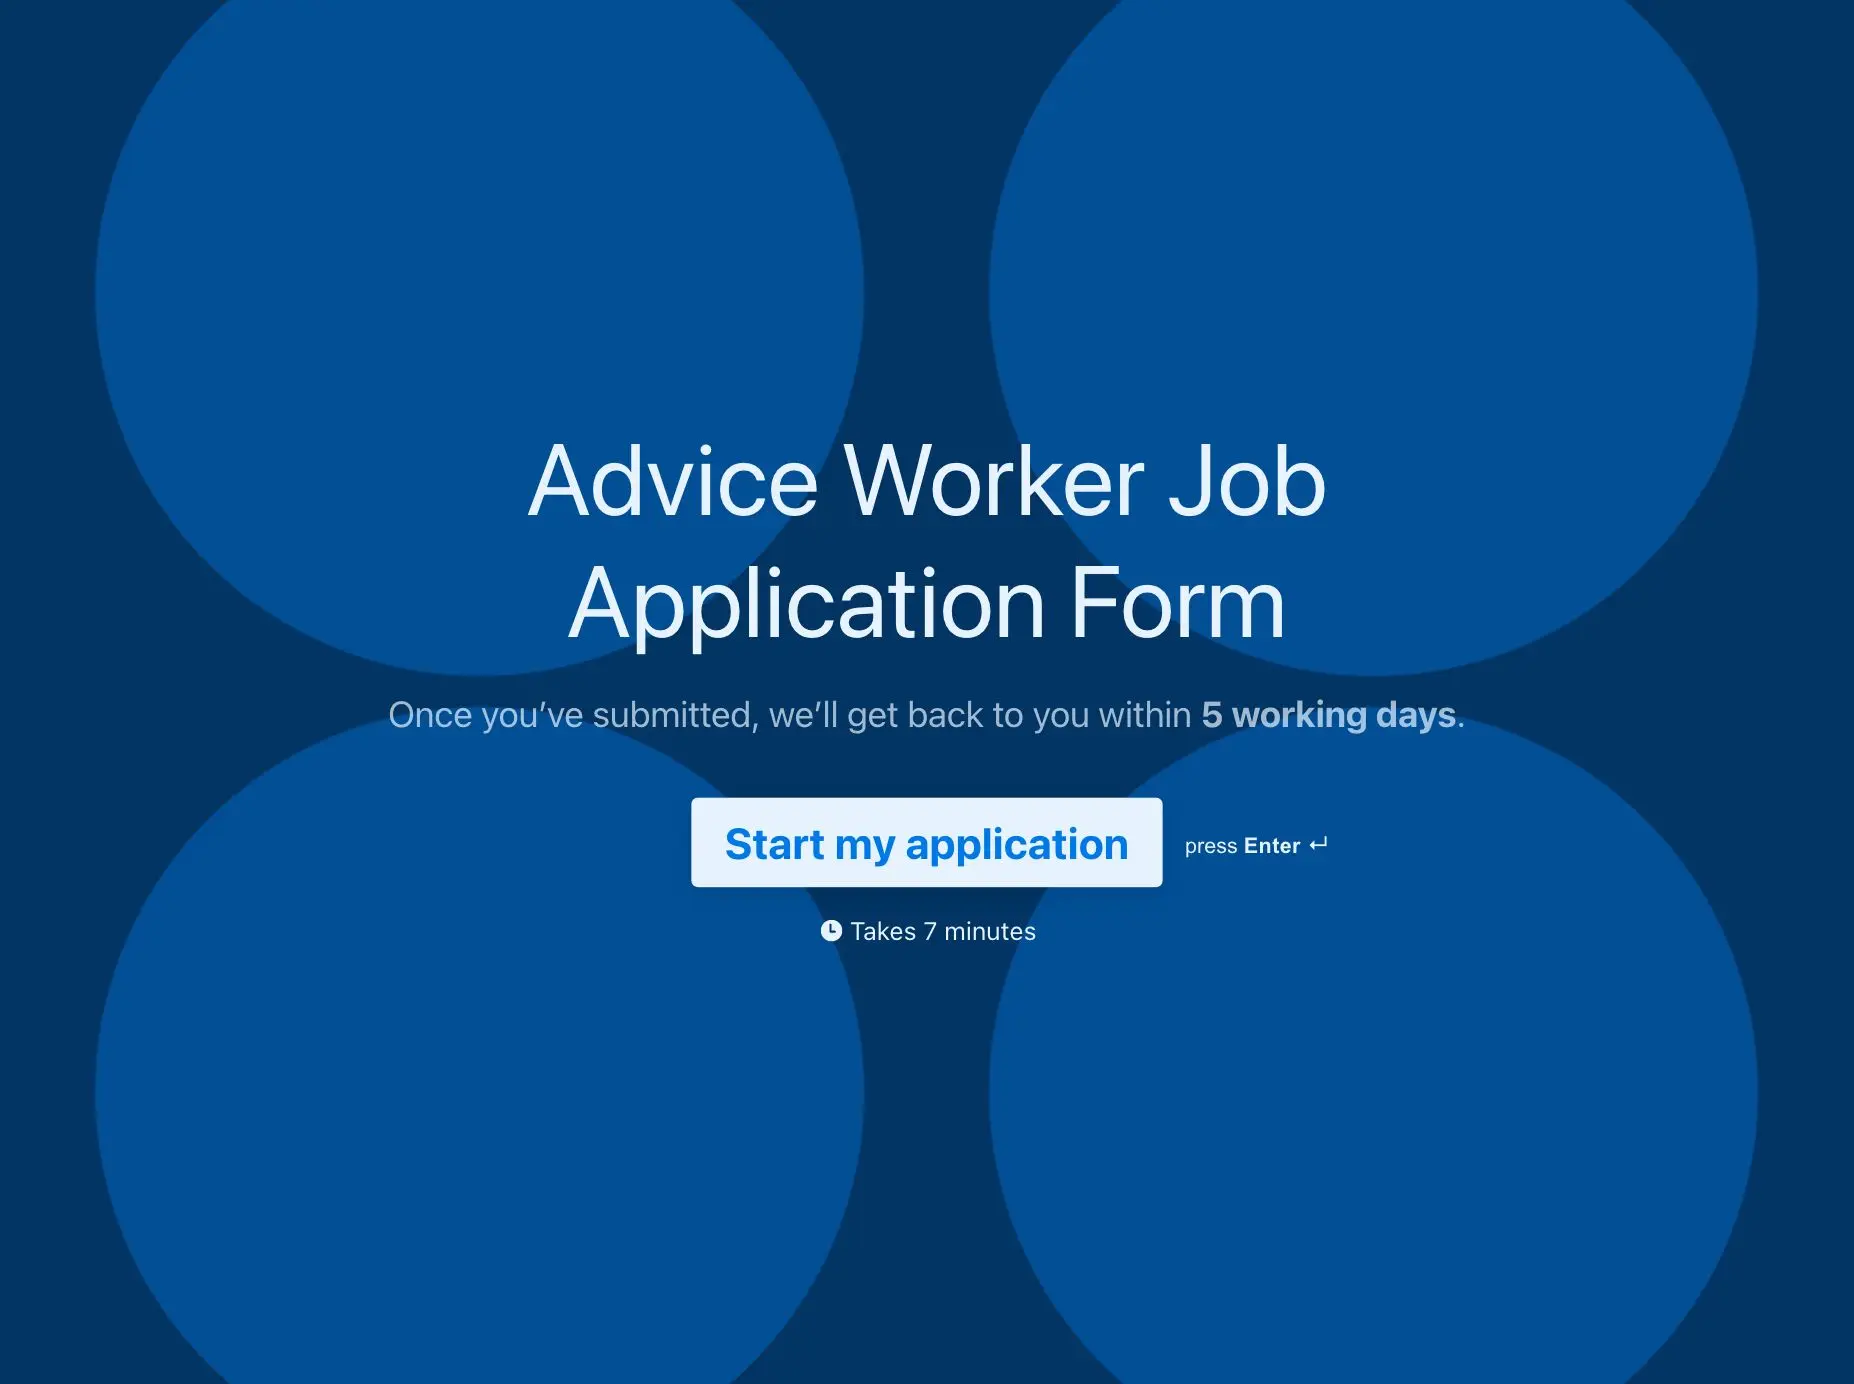 Advice Worker Job Application Form Template Hero